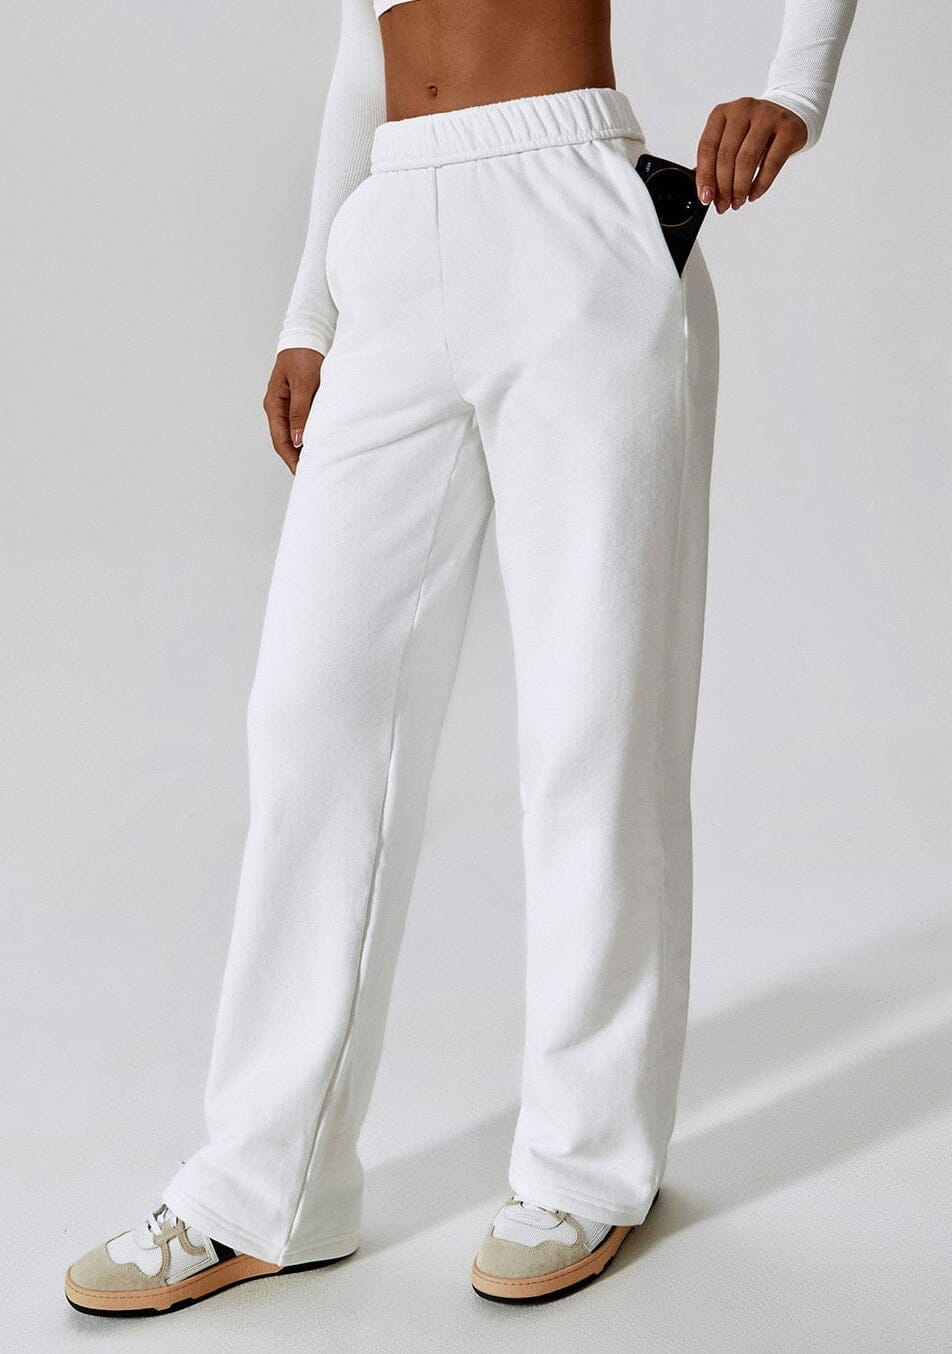 Reverie Plush Loose Pants Yoga Pants Starlethics Swan White S 